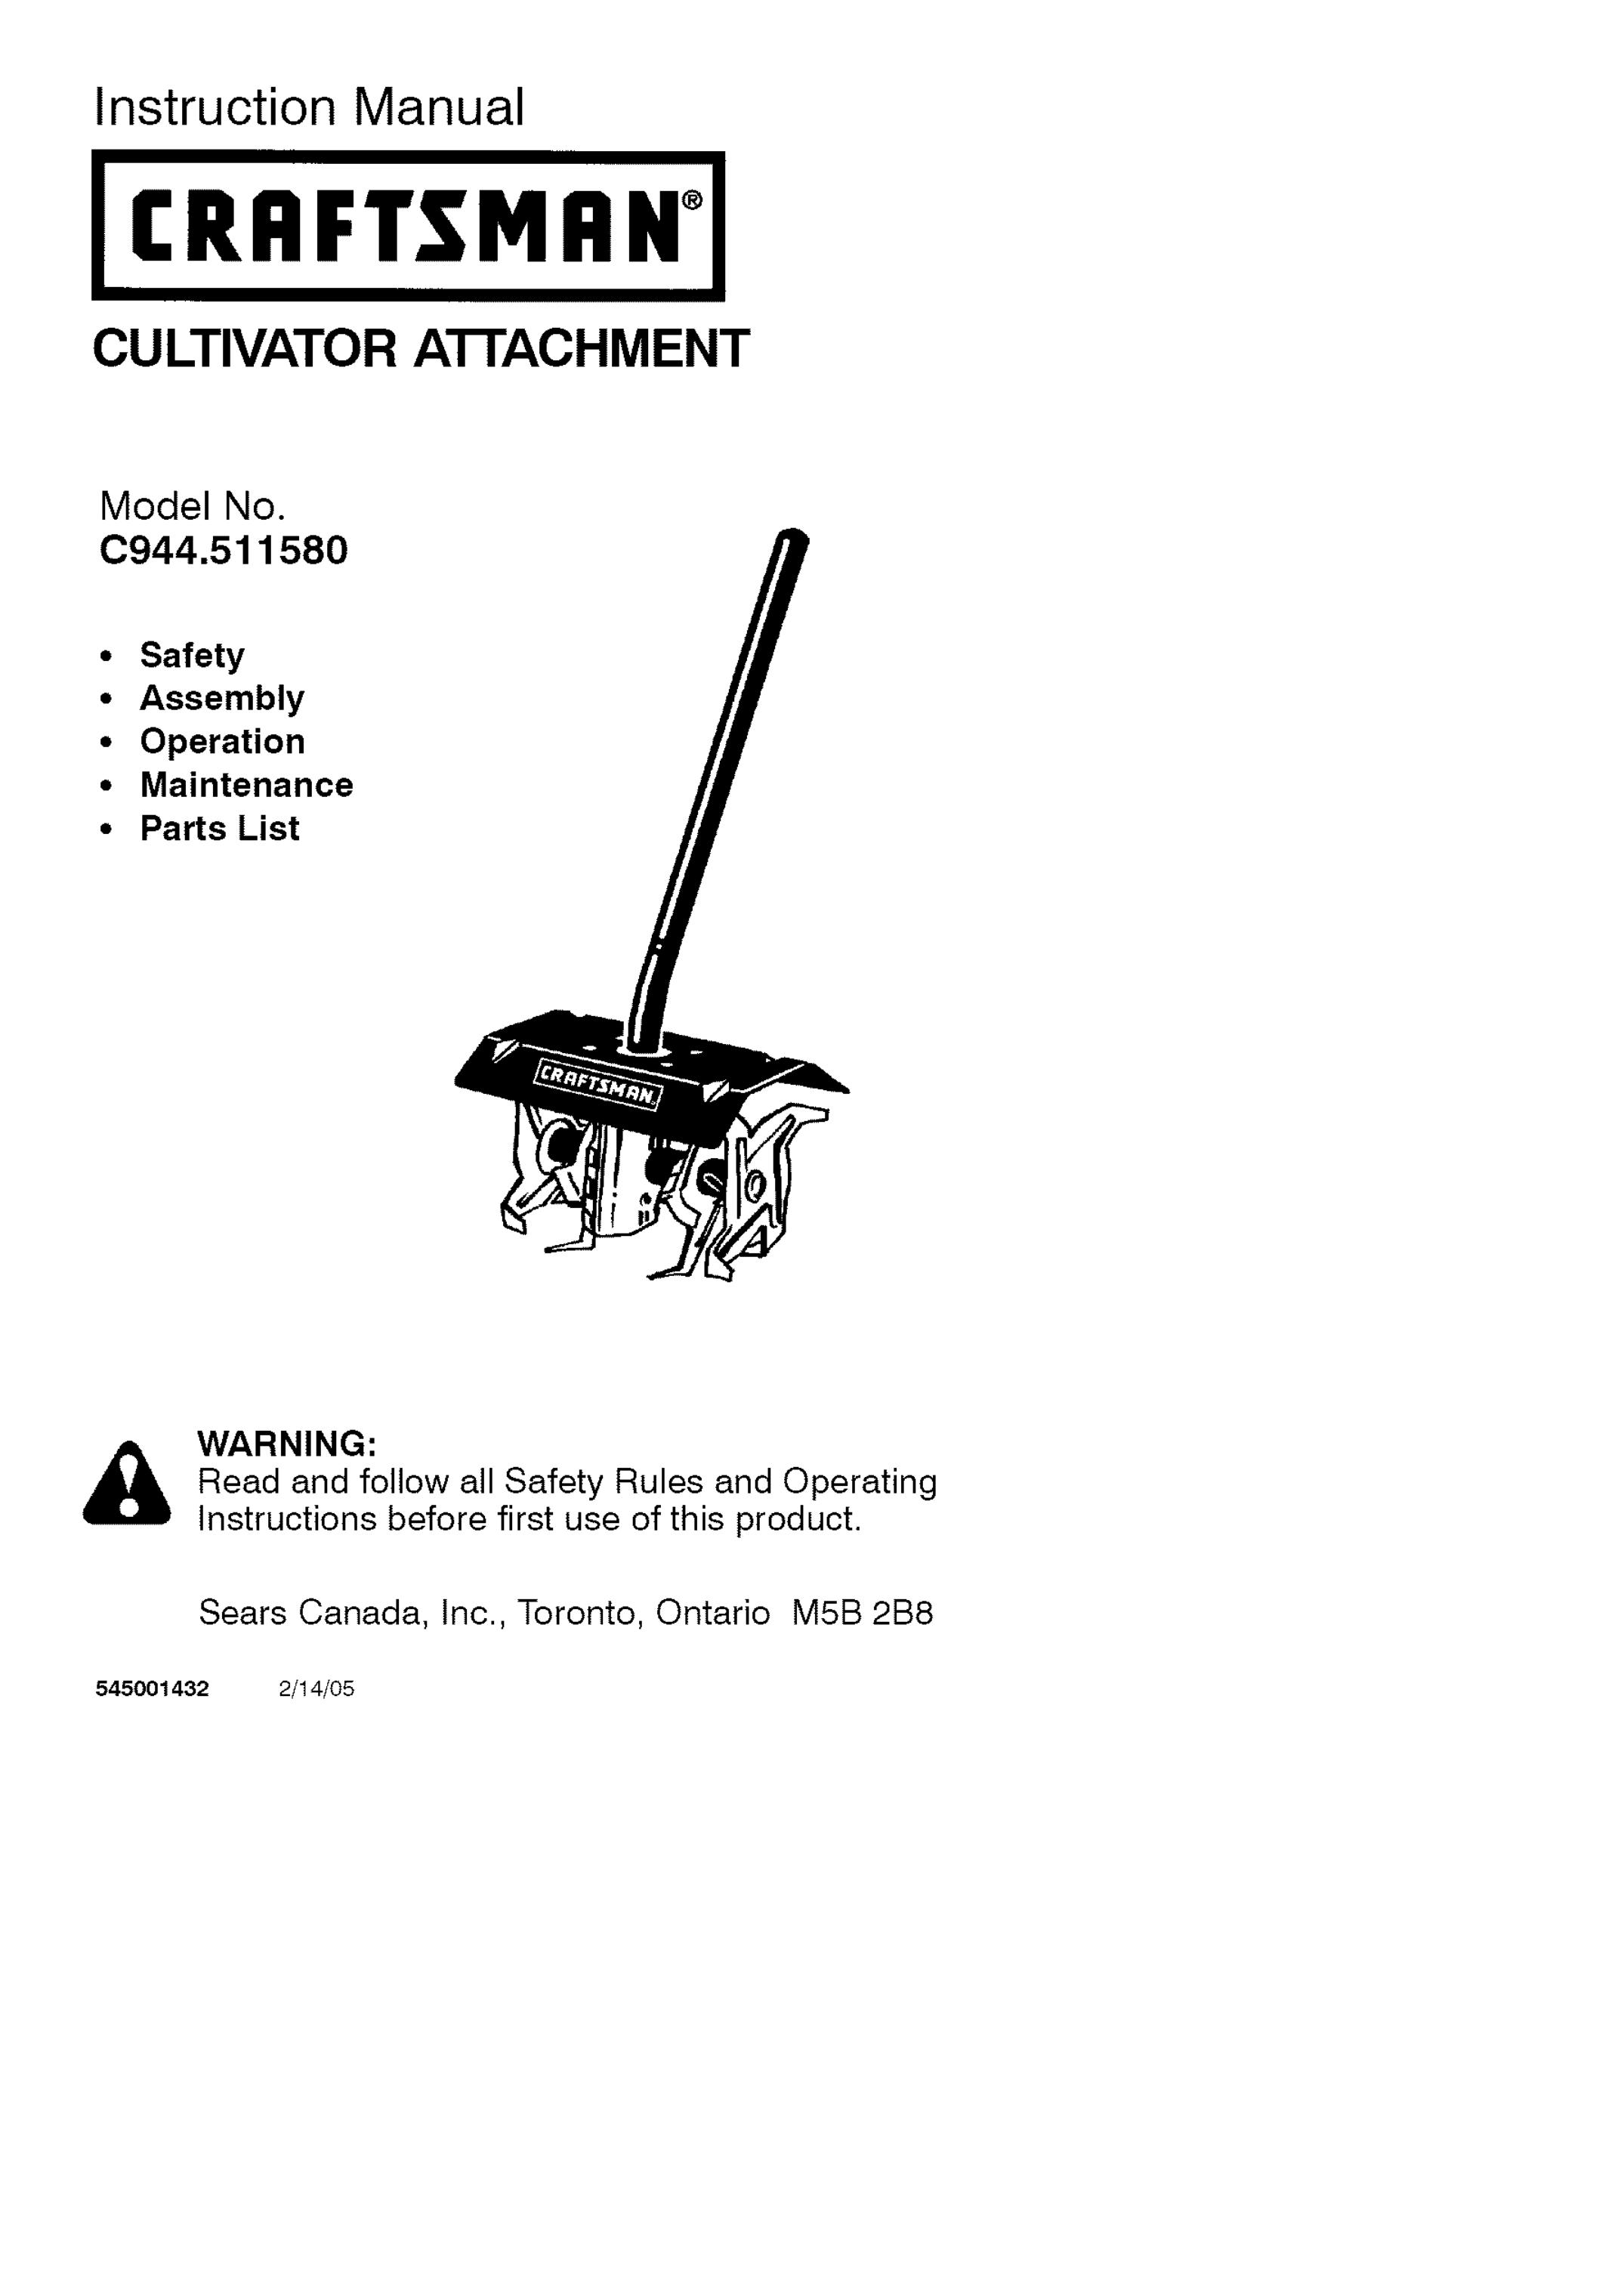 Craftsman 944.511580 Cultivator User Manual